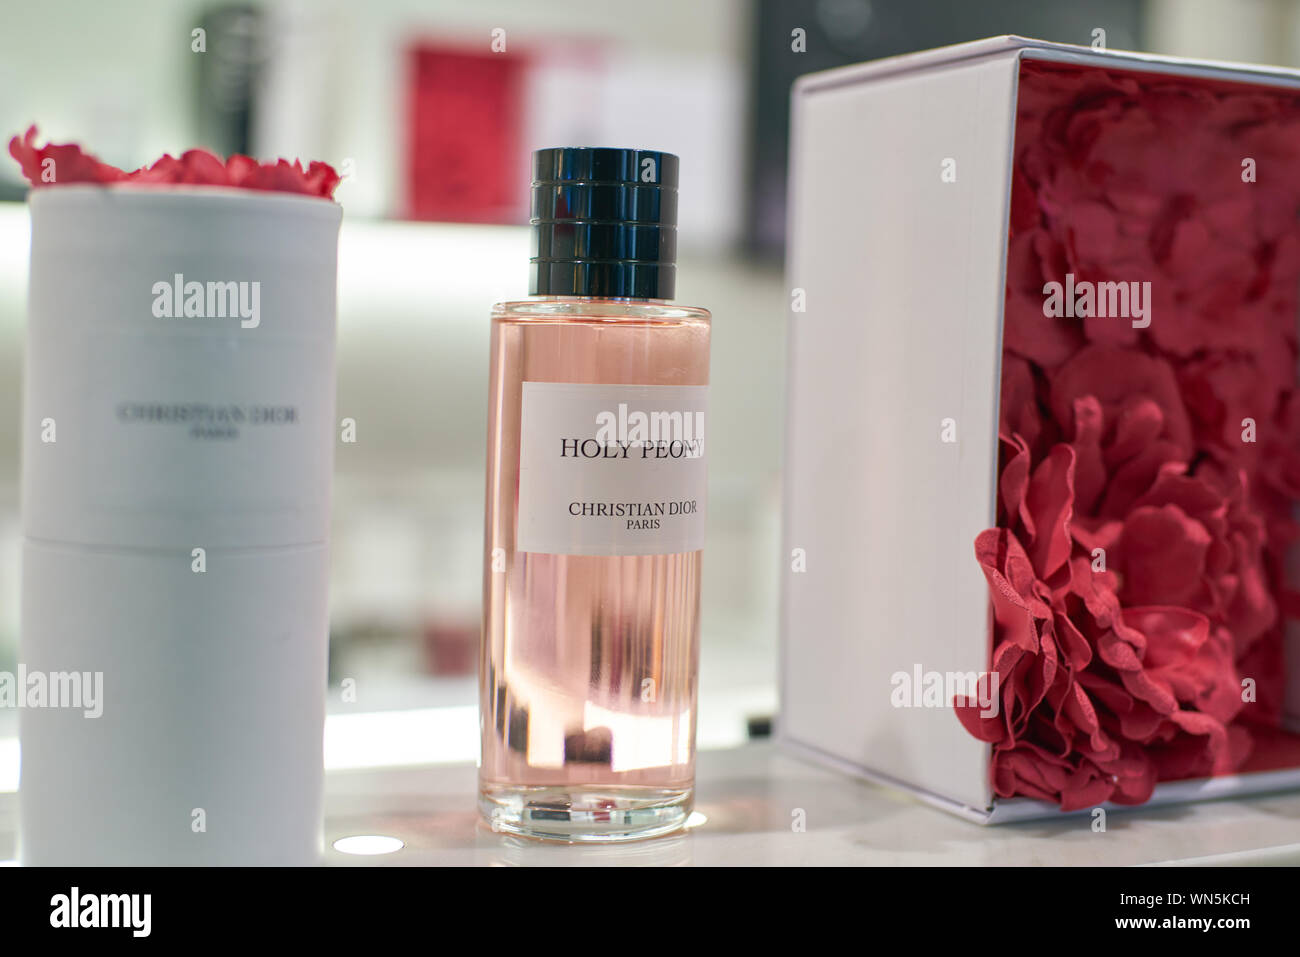 Luxe Parfum Miri - UAE Perfume